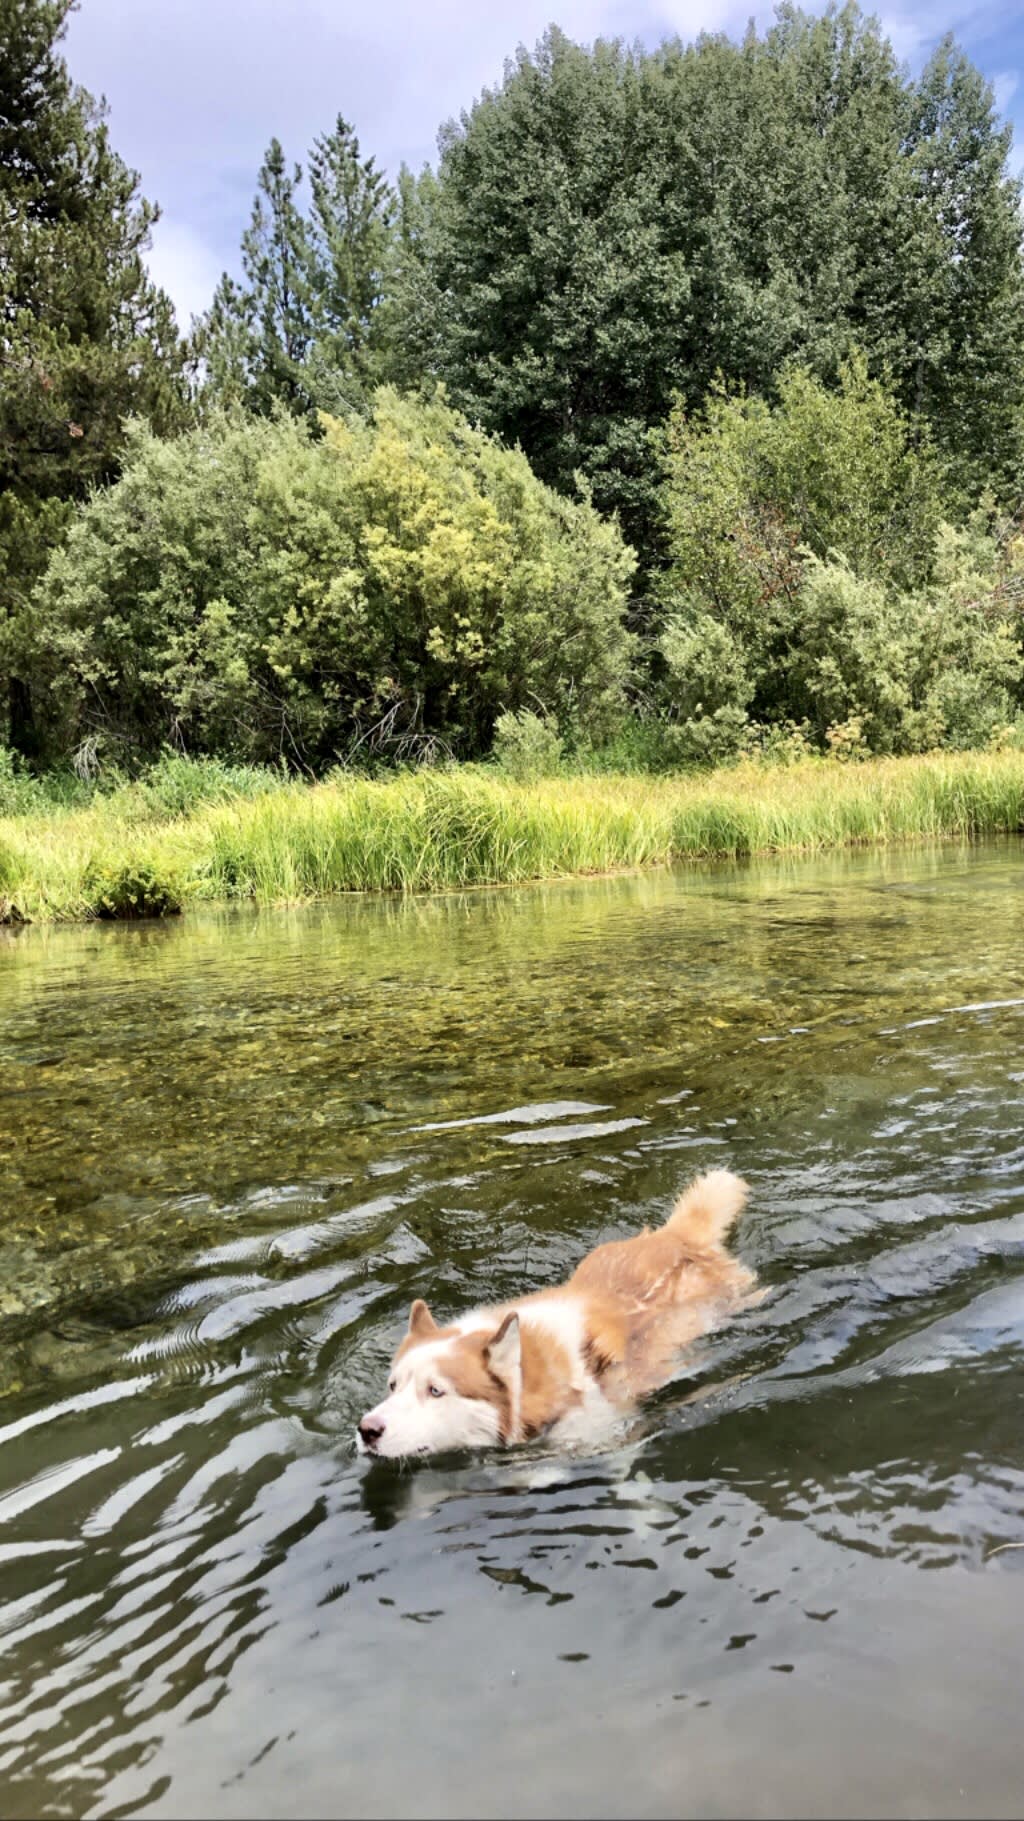 Swimming in the creek.